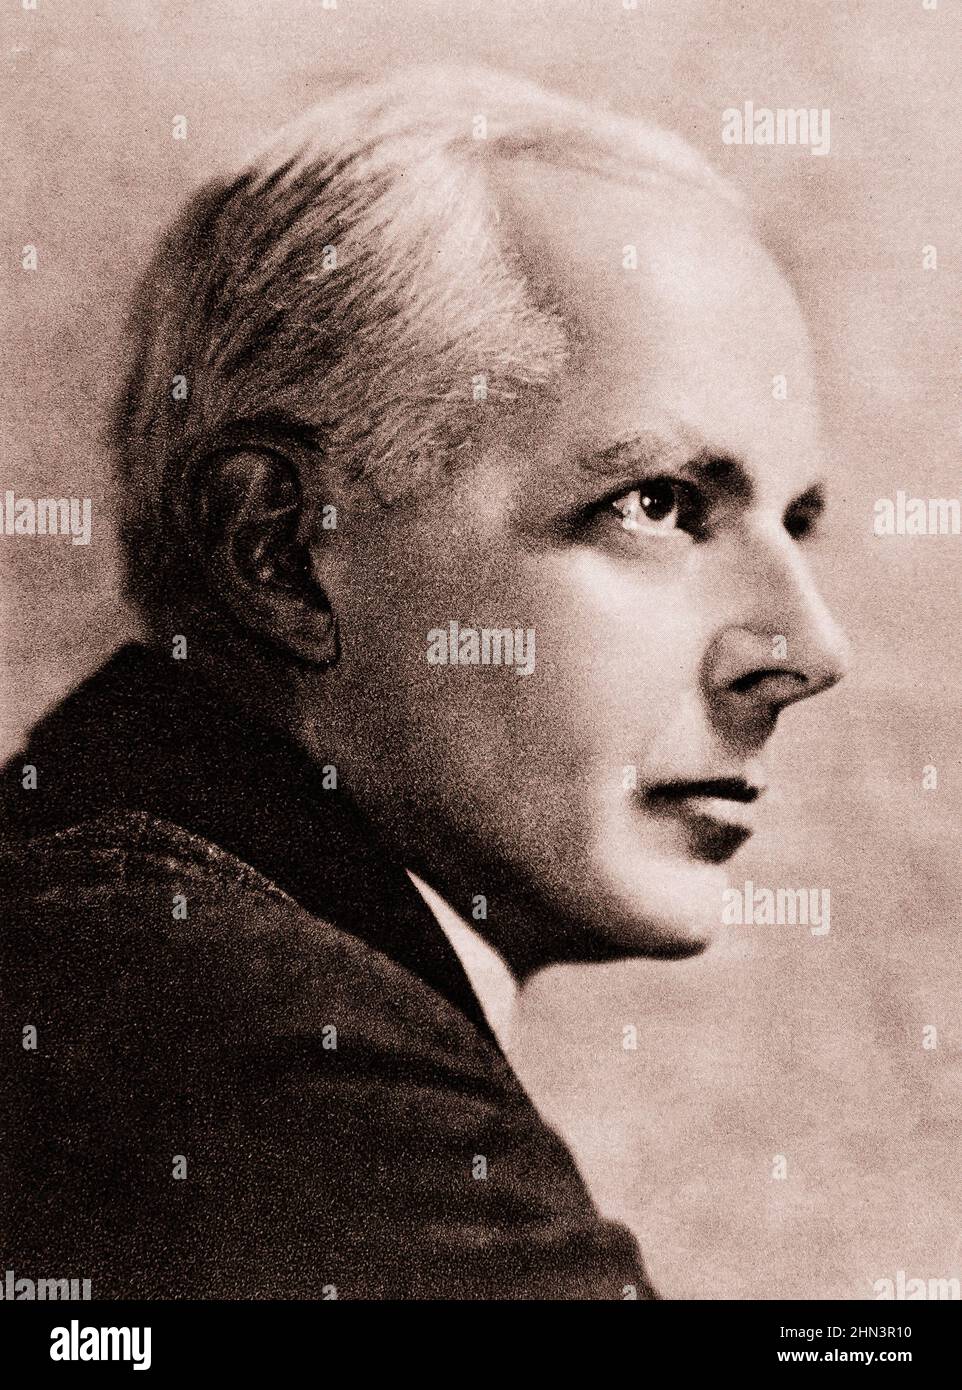 Vintage photo of Béla Bartók. 1922 Composer, pianist, and ethnomusicologist Béla Bartók (1881-1945) was born in Nagyszentmiklós, Hungary (present-d Stock Photo